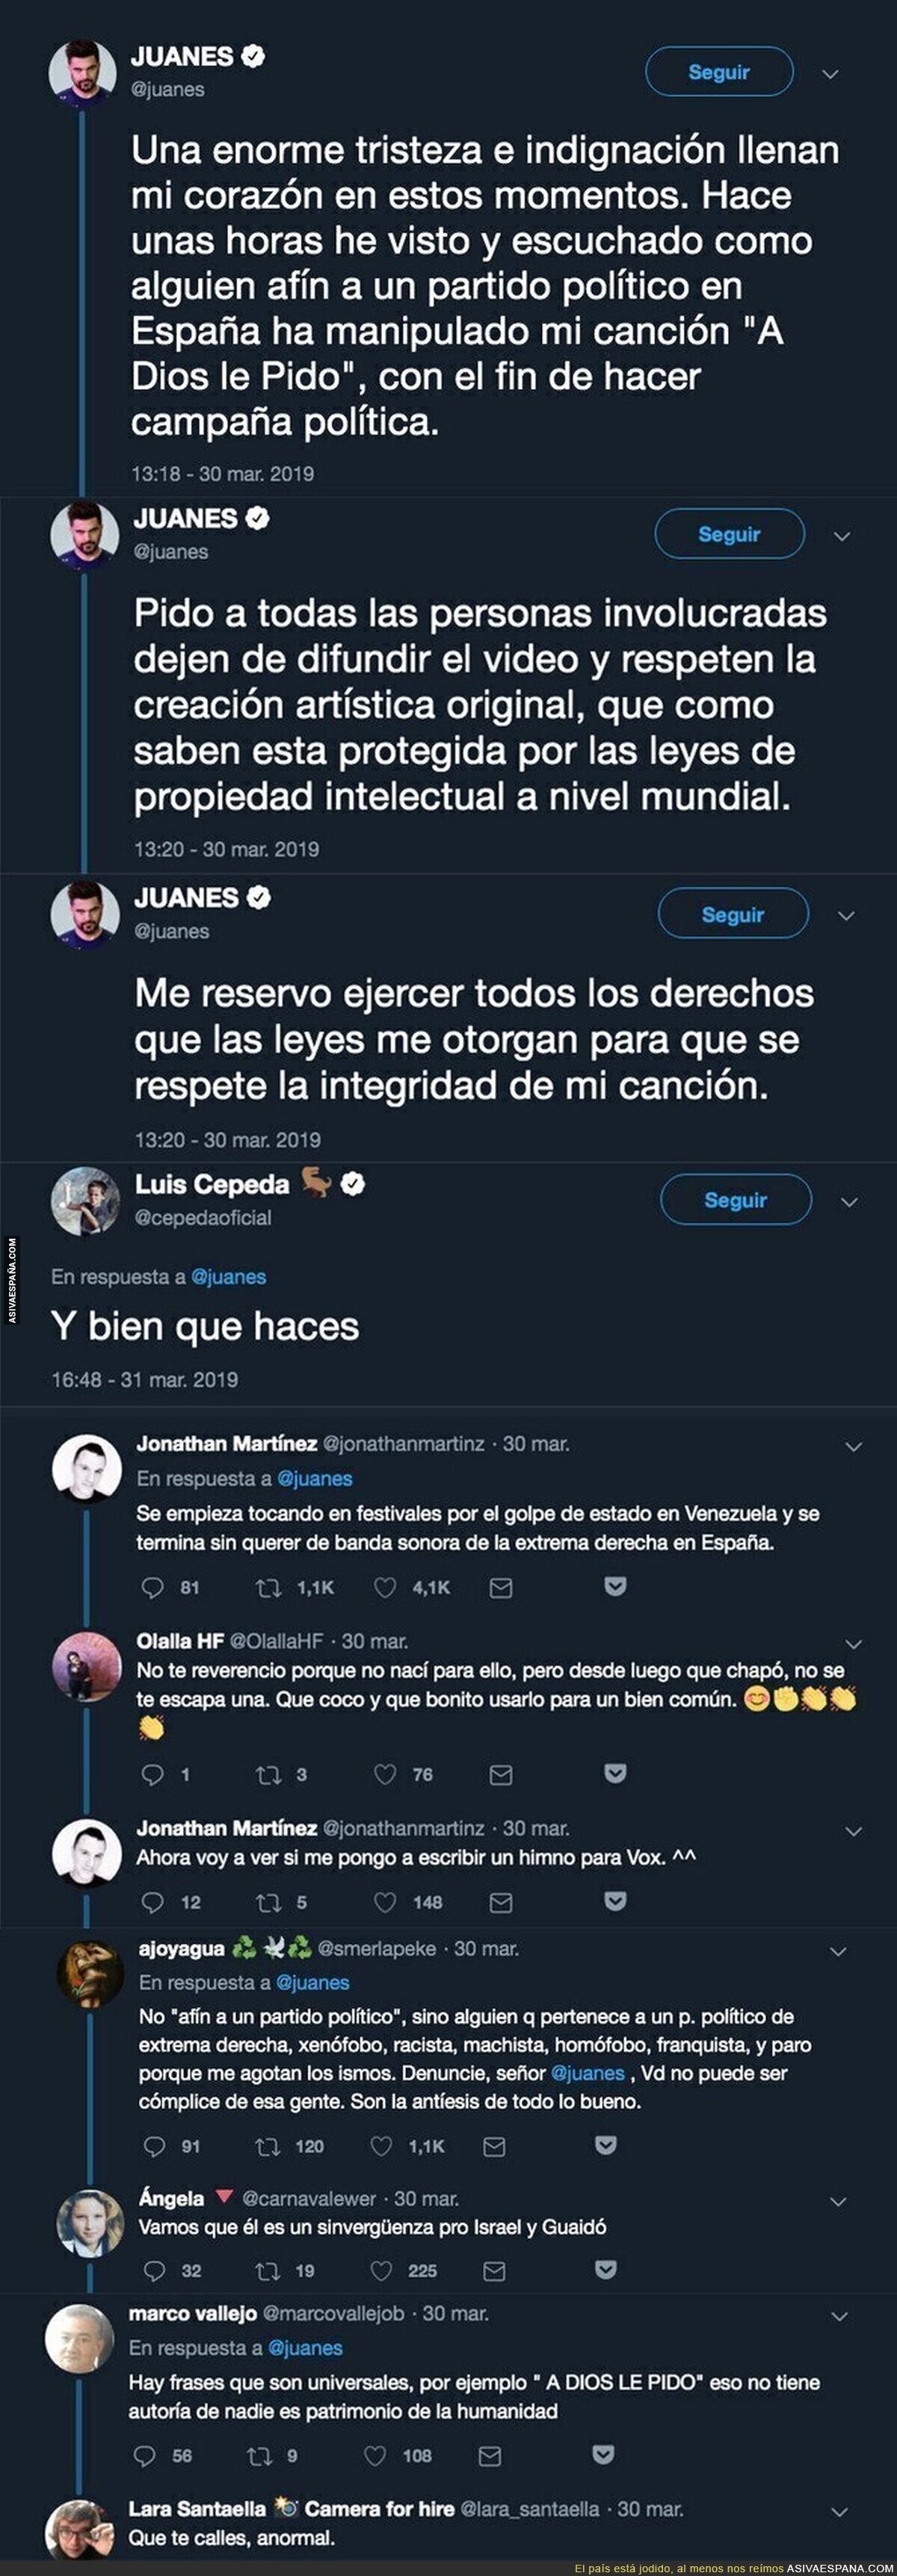 Juanes le da un gran revés a VOX por intentar usar su canción "A Dios le pido" con letra modificada con fines políticos